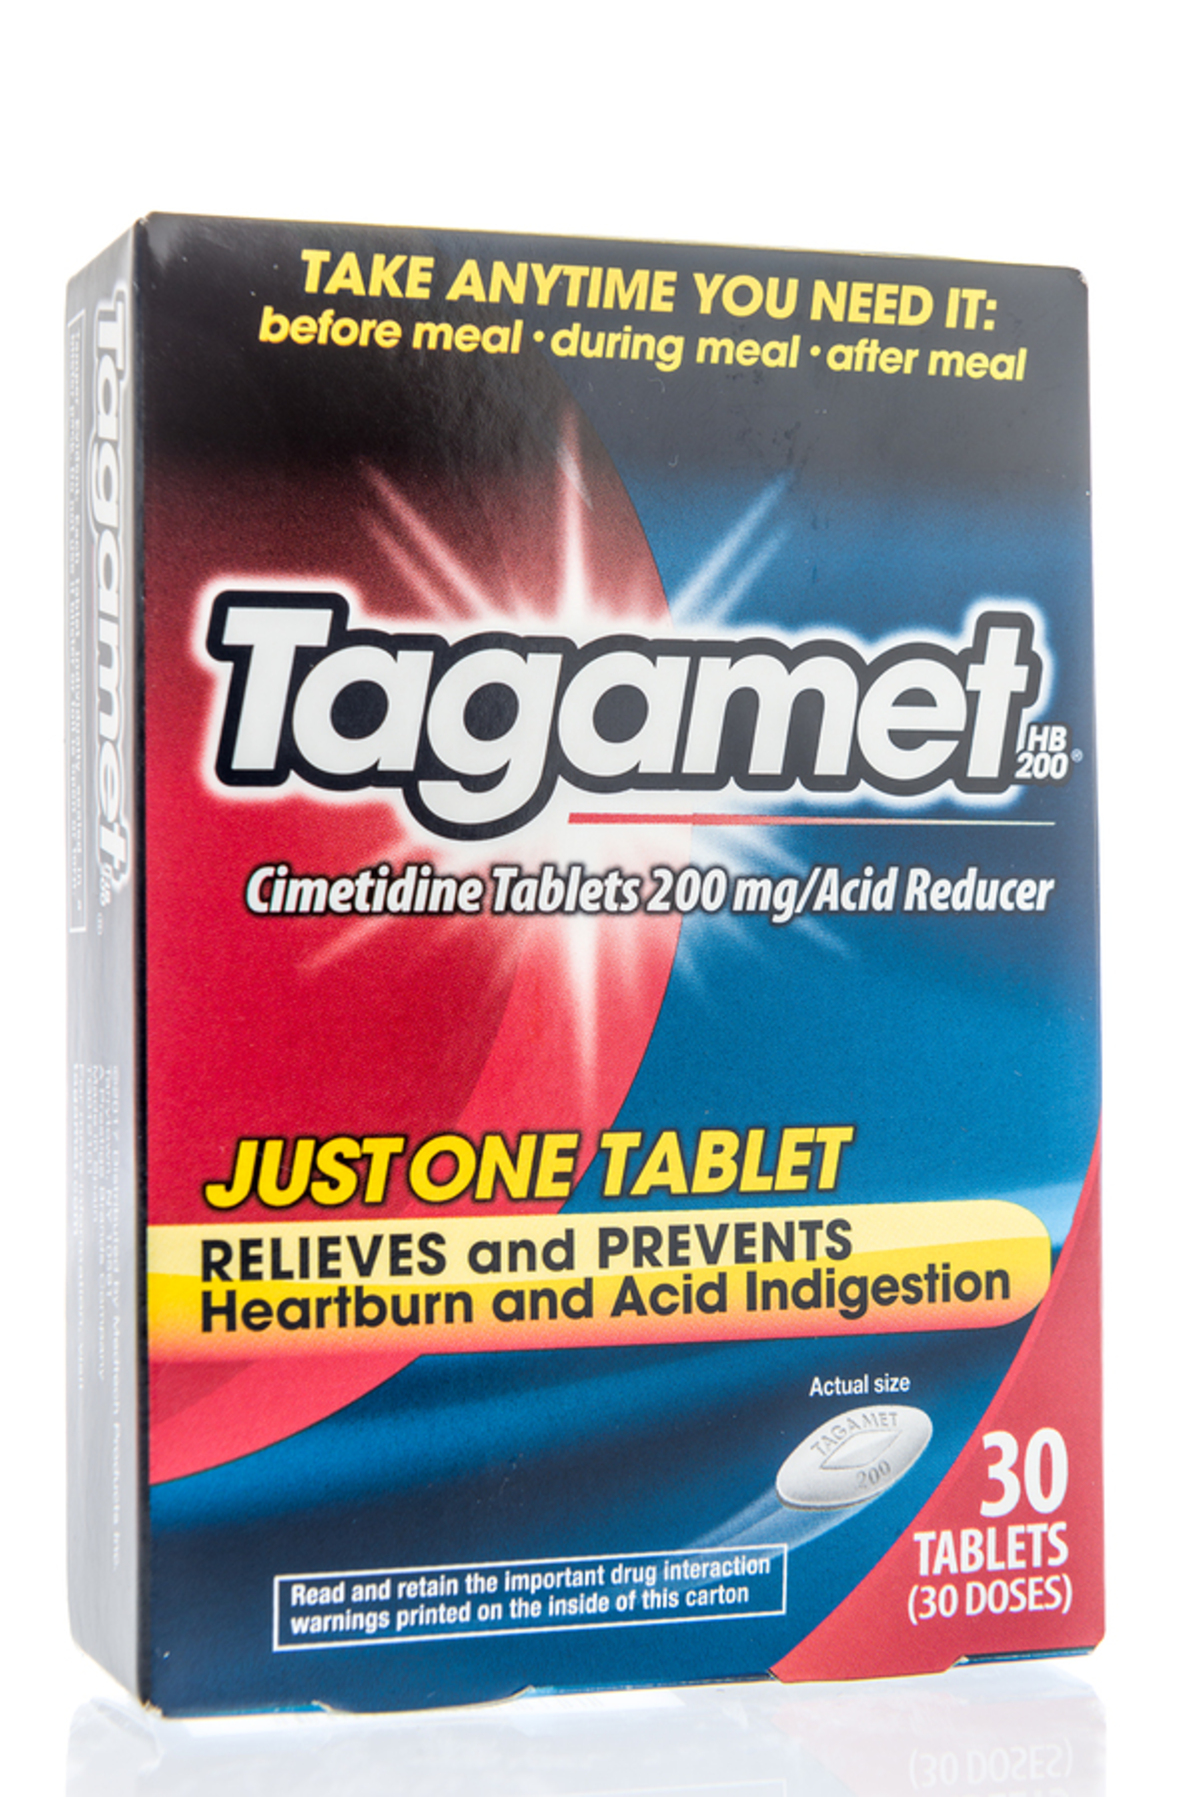 Tagamet box with drug information.